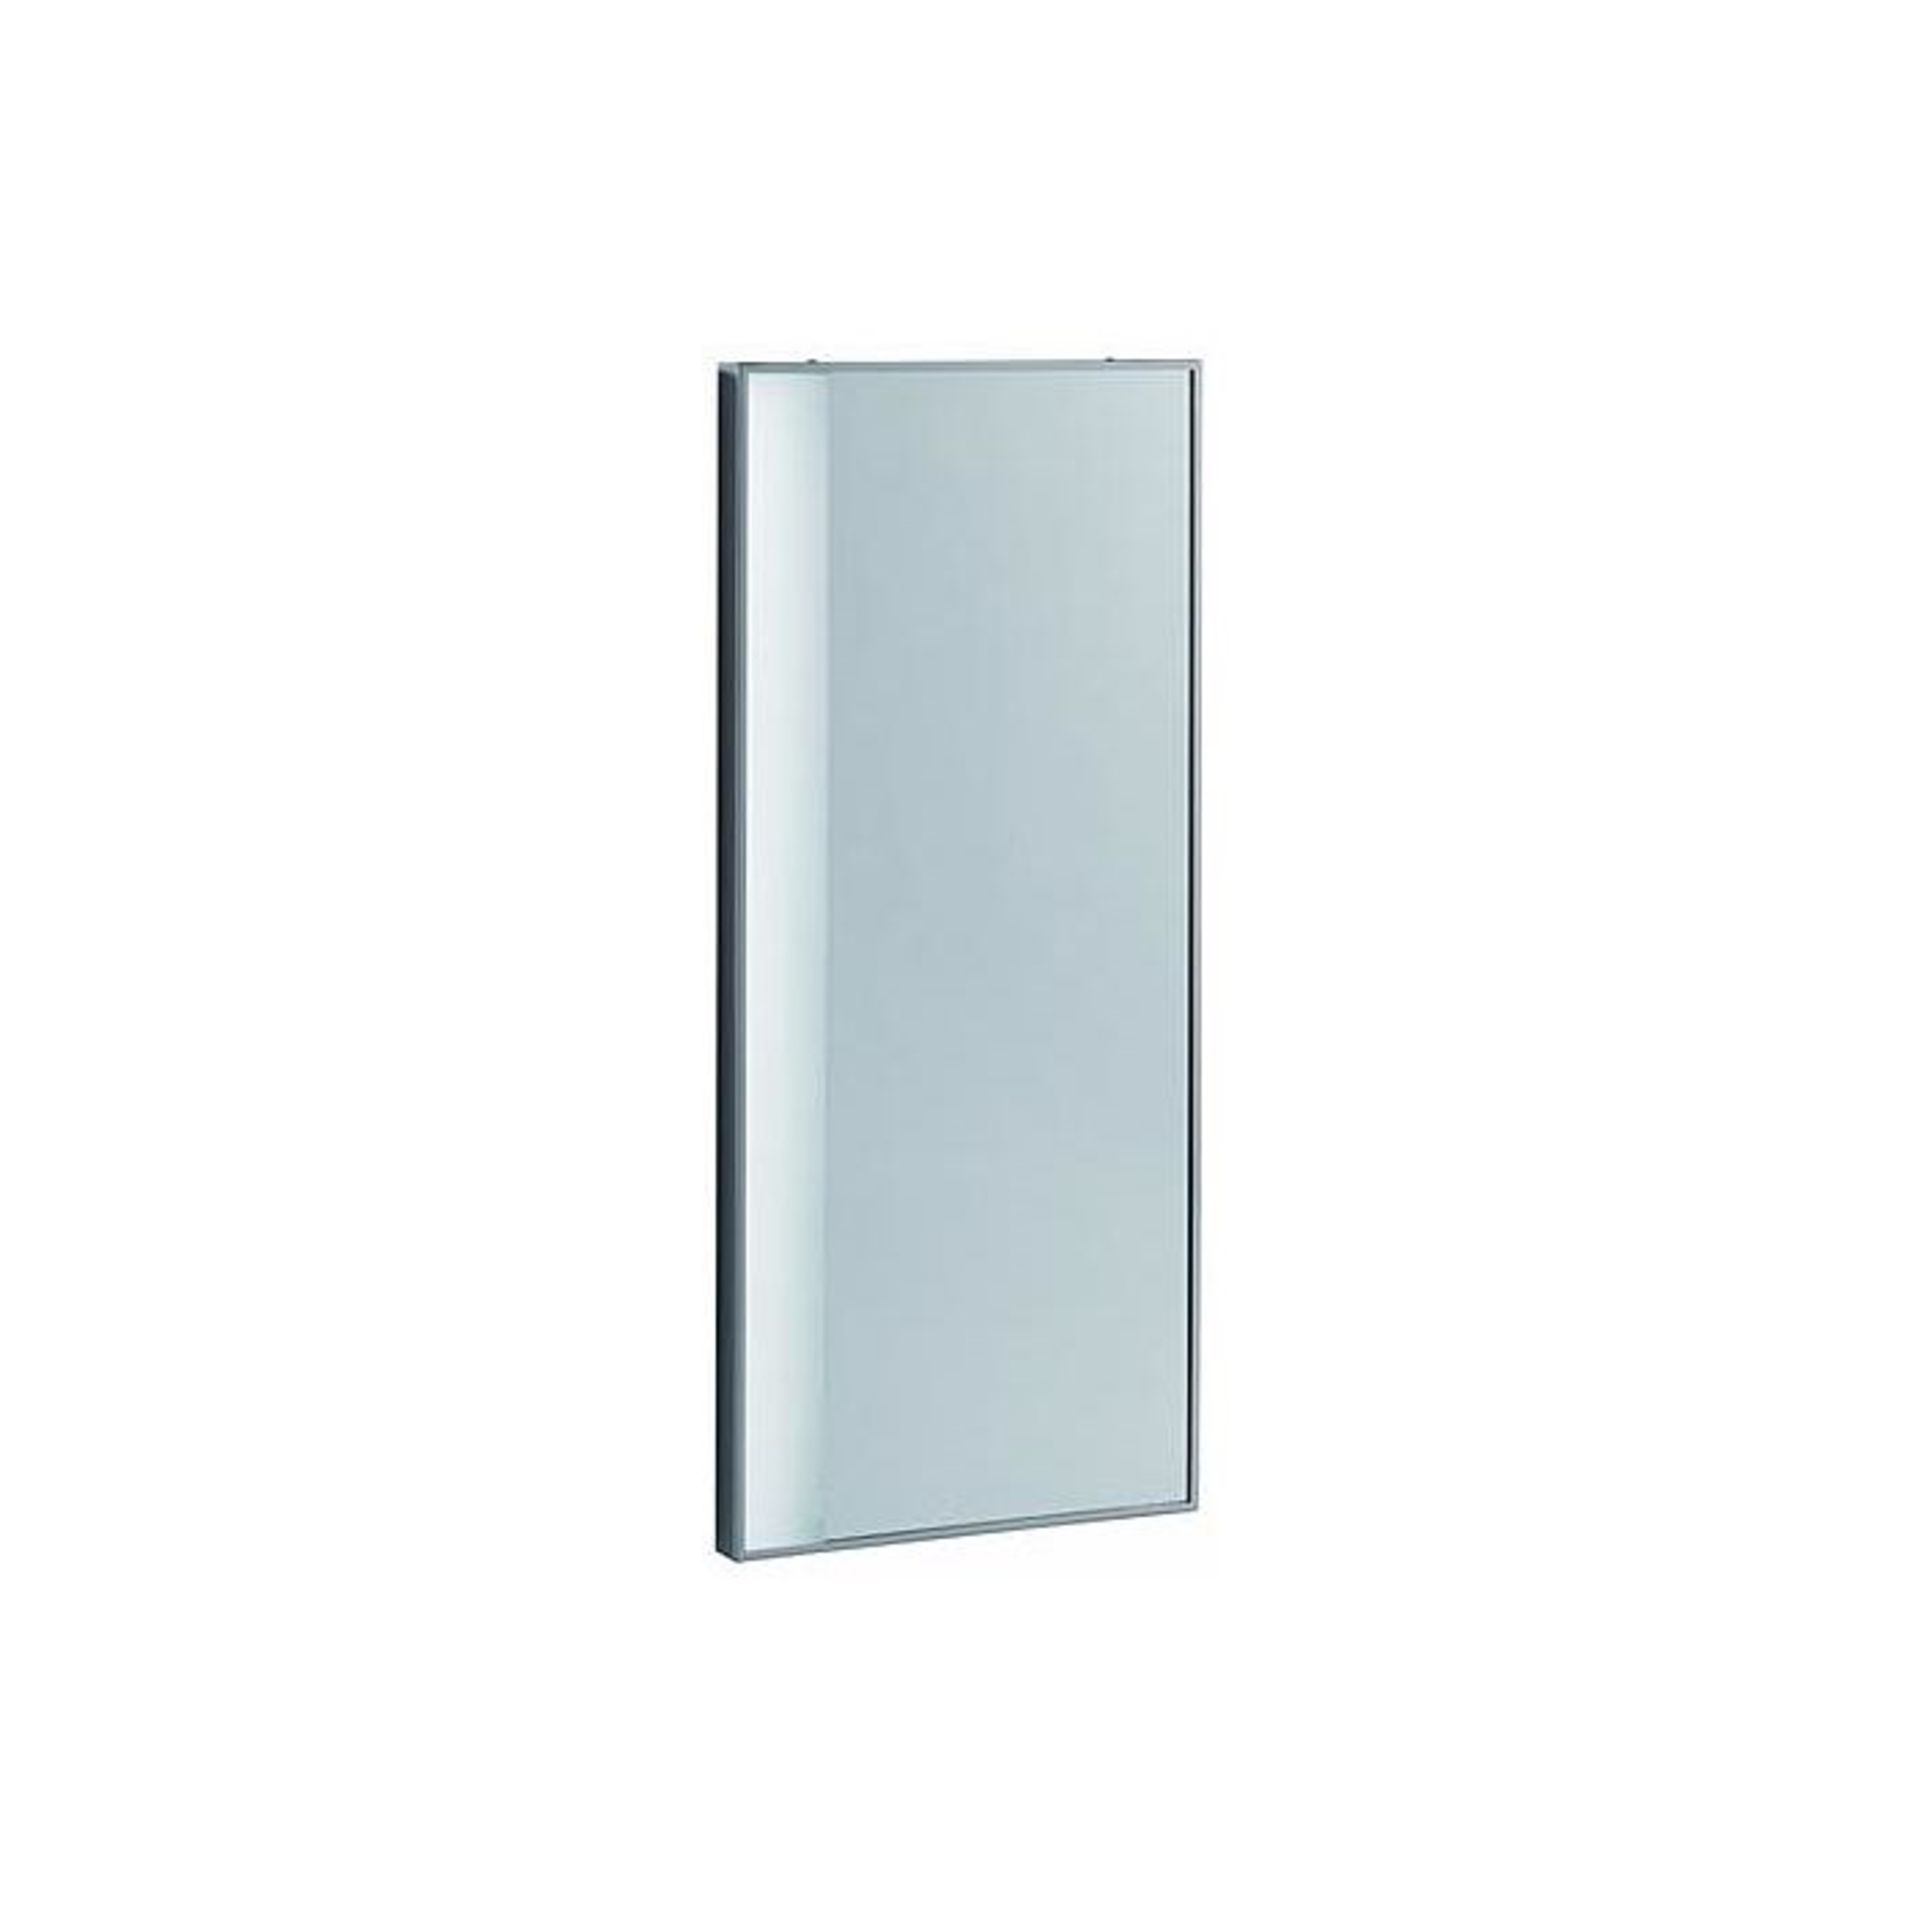 (RR30) 400x900mm Keramag Silk light mirror, right or left.RRP £887.99.The Keramag Silk mirror ... - Image 3 of 3